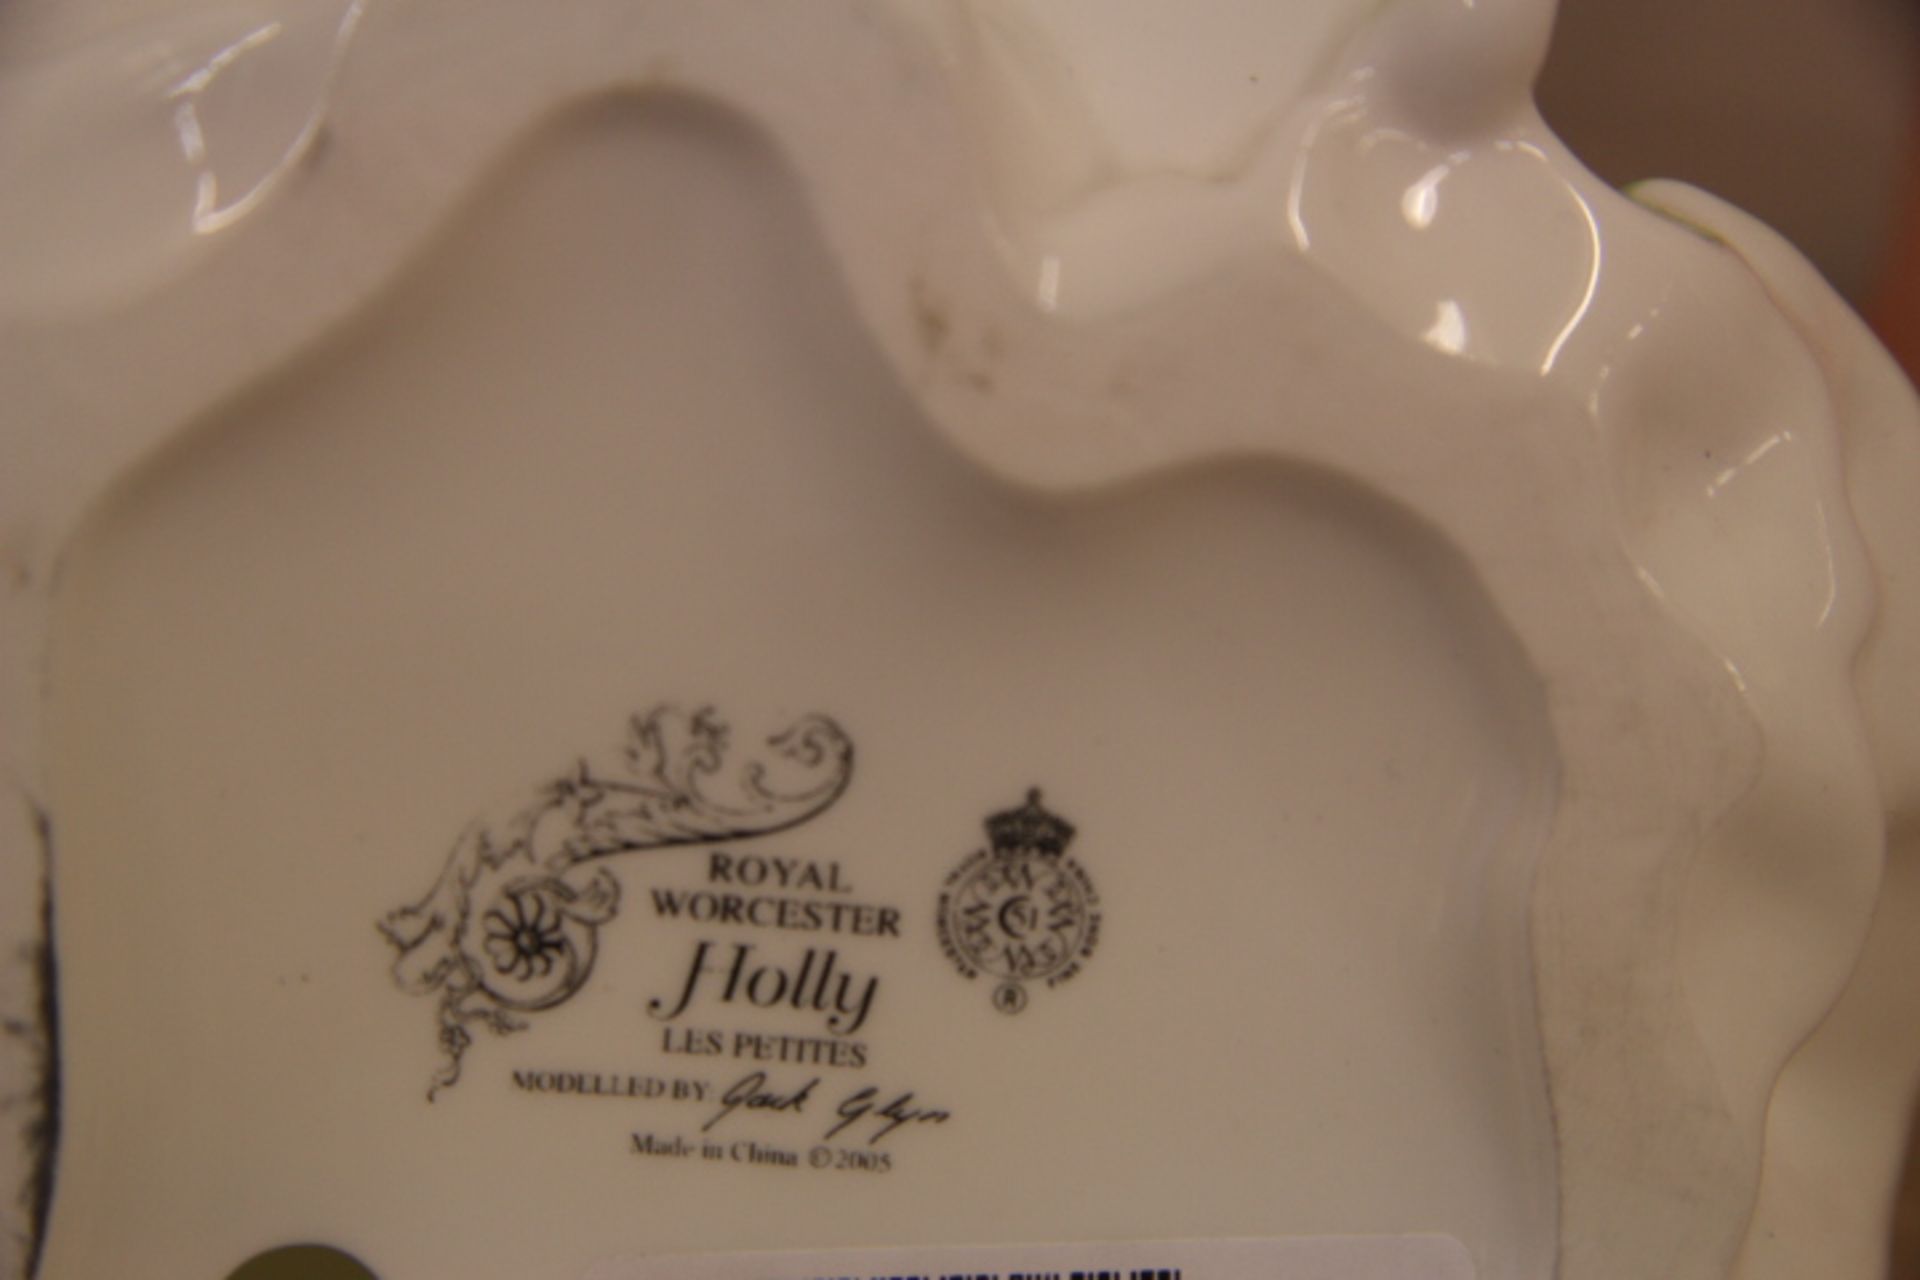 Grade U Royal Worcester Les Petites-Holly Figurine - Image 2 of 2